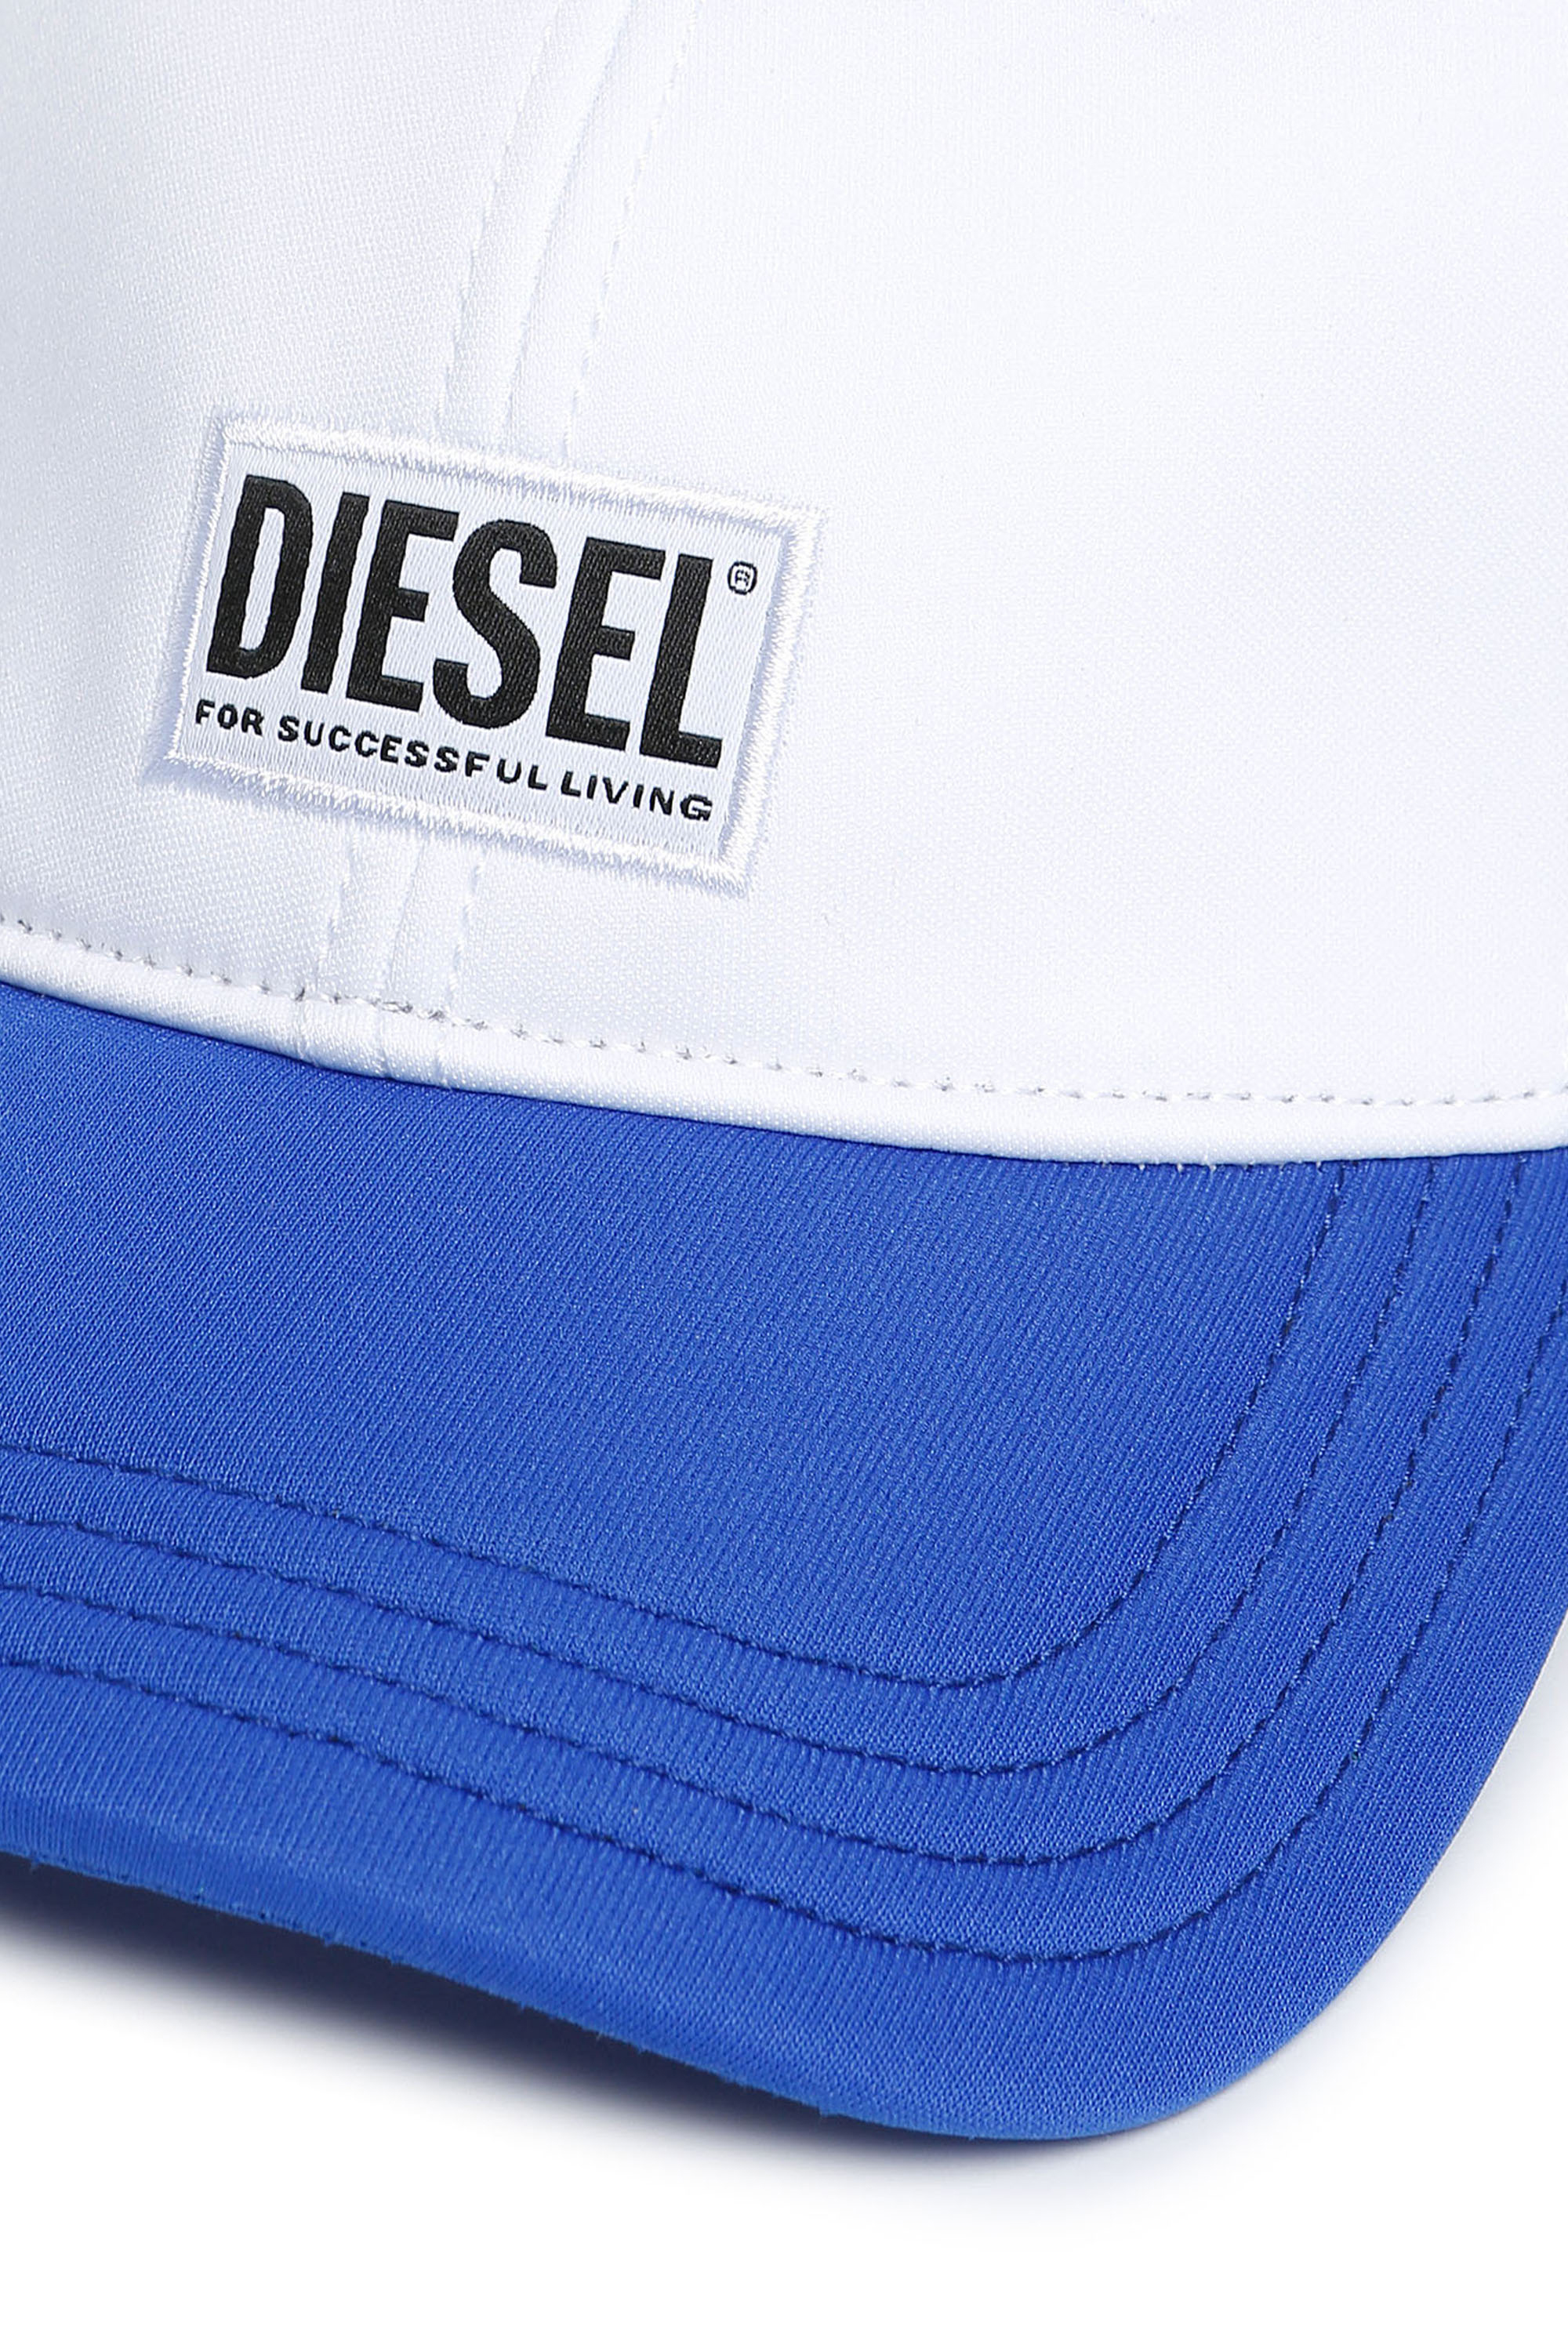 Diesel - FDURBO, Blanc/Bleu - Image 3